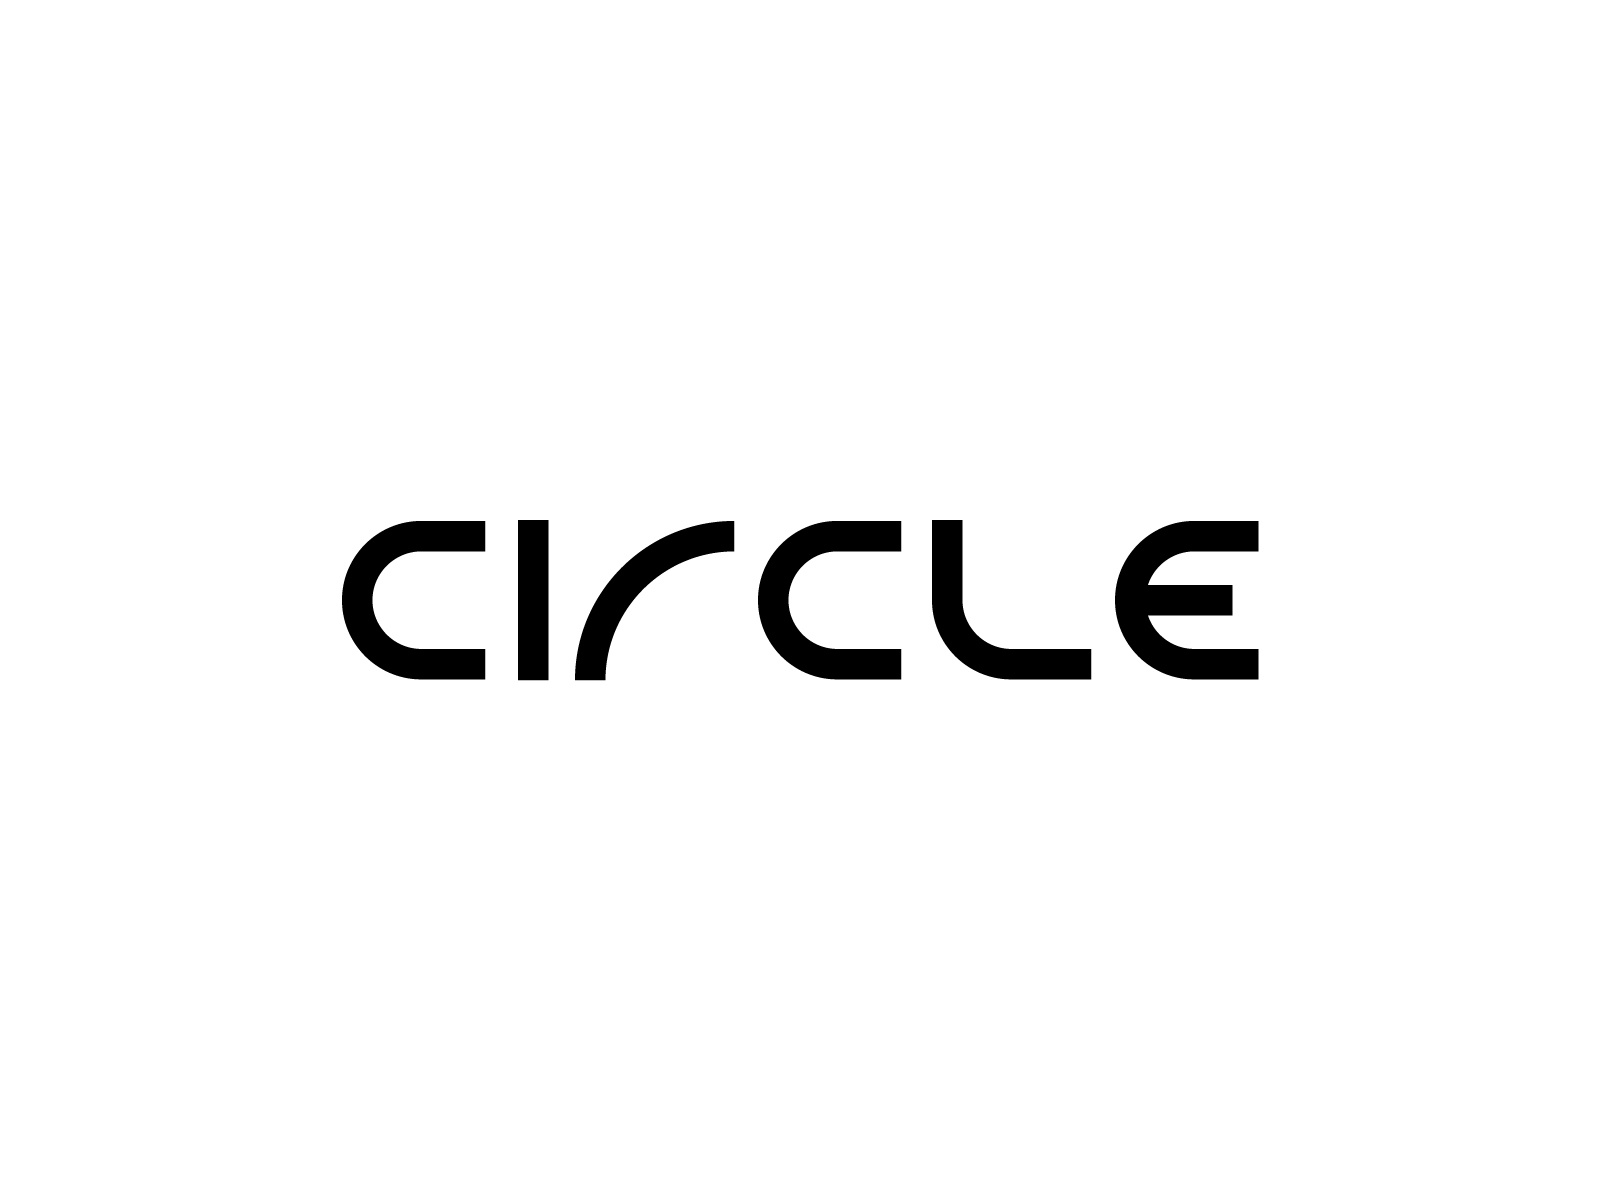 Circle Wordmark Logo By Kanhaiya Sharma On Dribbble